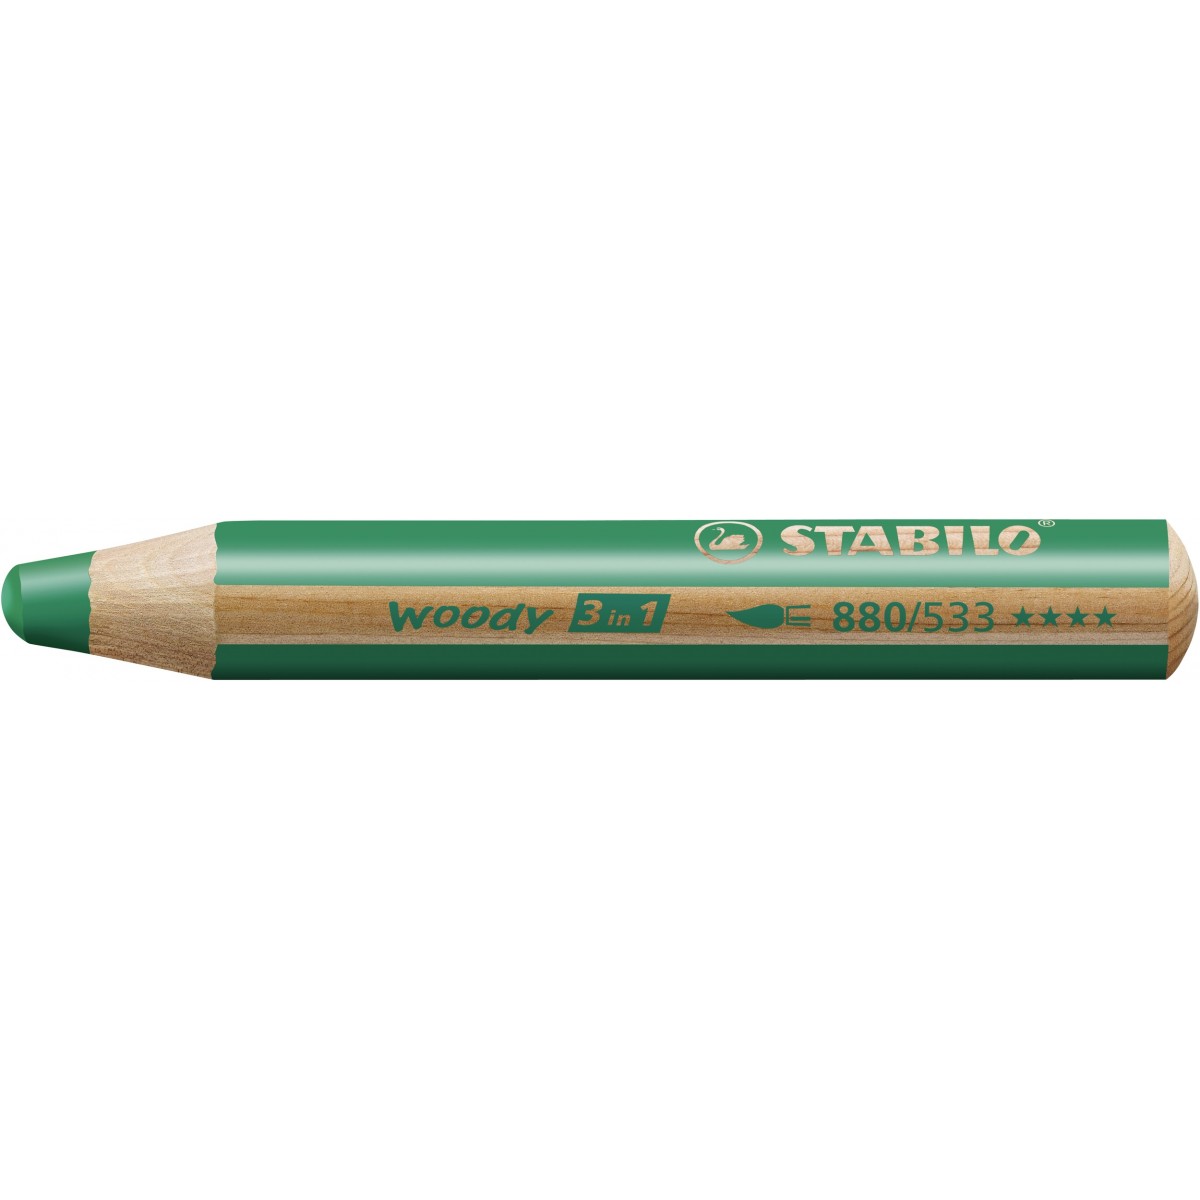 STABILO woody Farbstift dunkelgrün wasservermalbar Multitalent-Stift